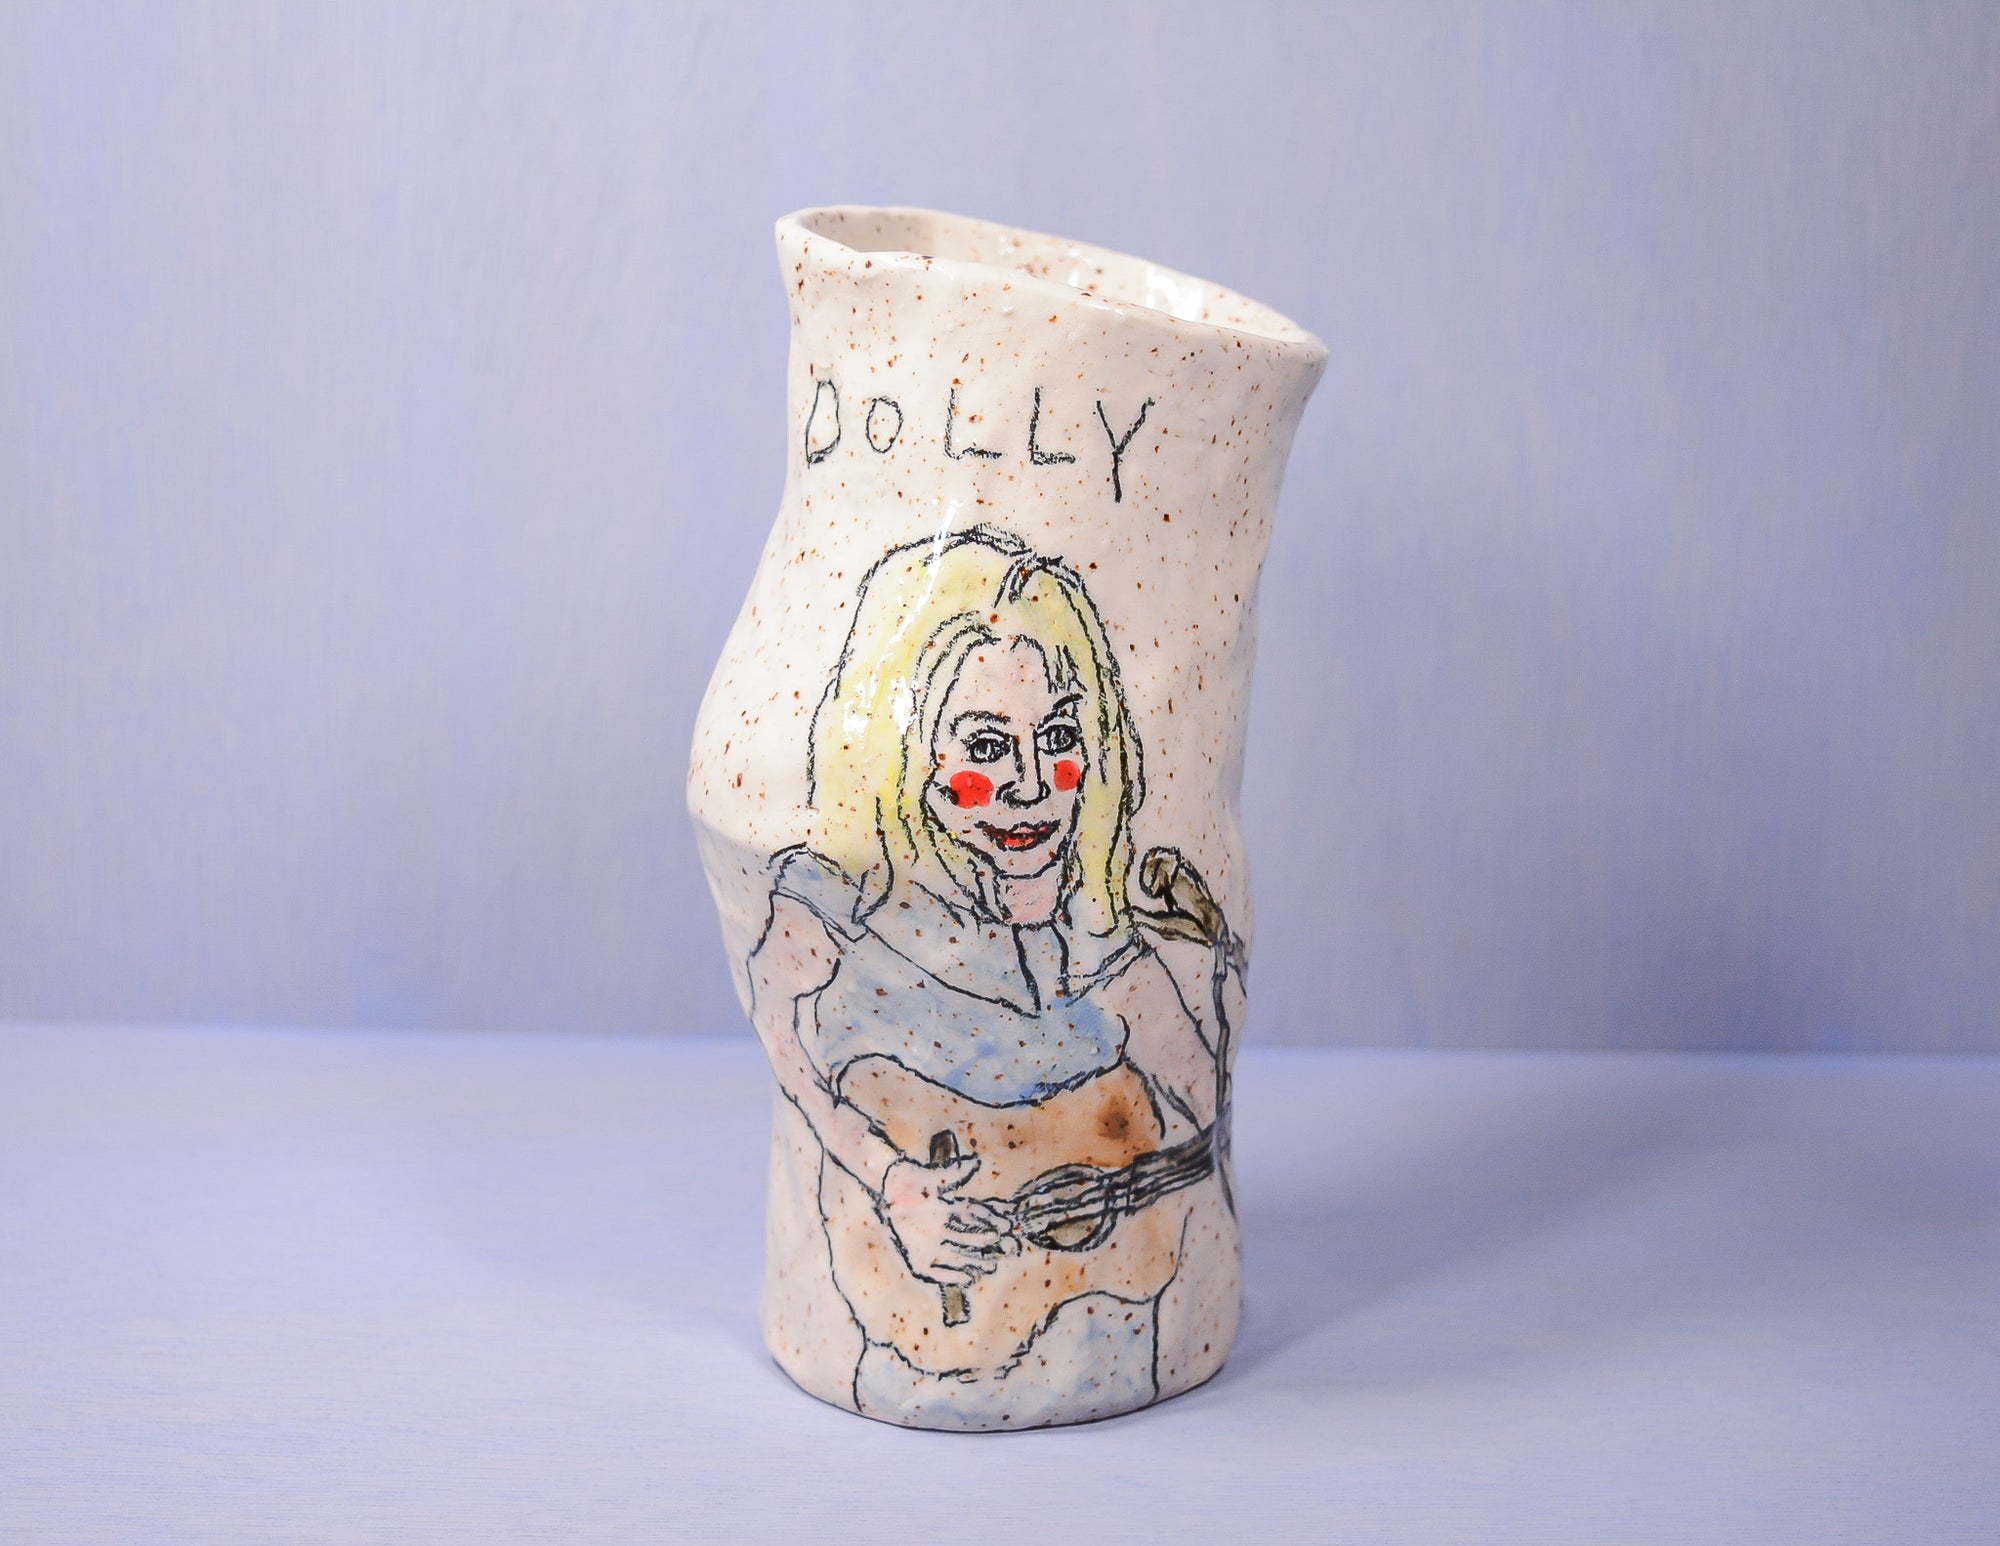 Dolly Hand Built Vase